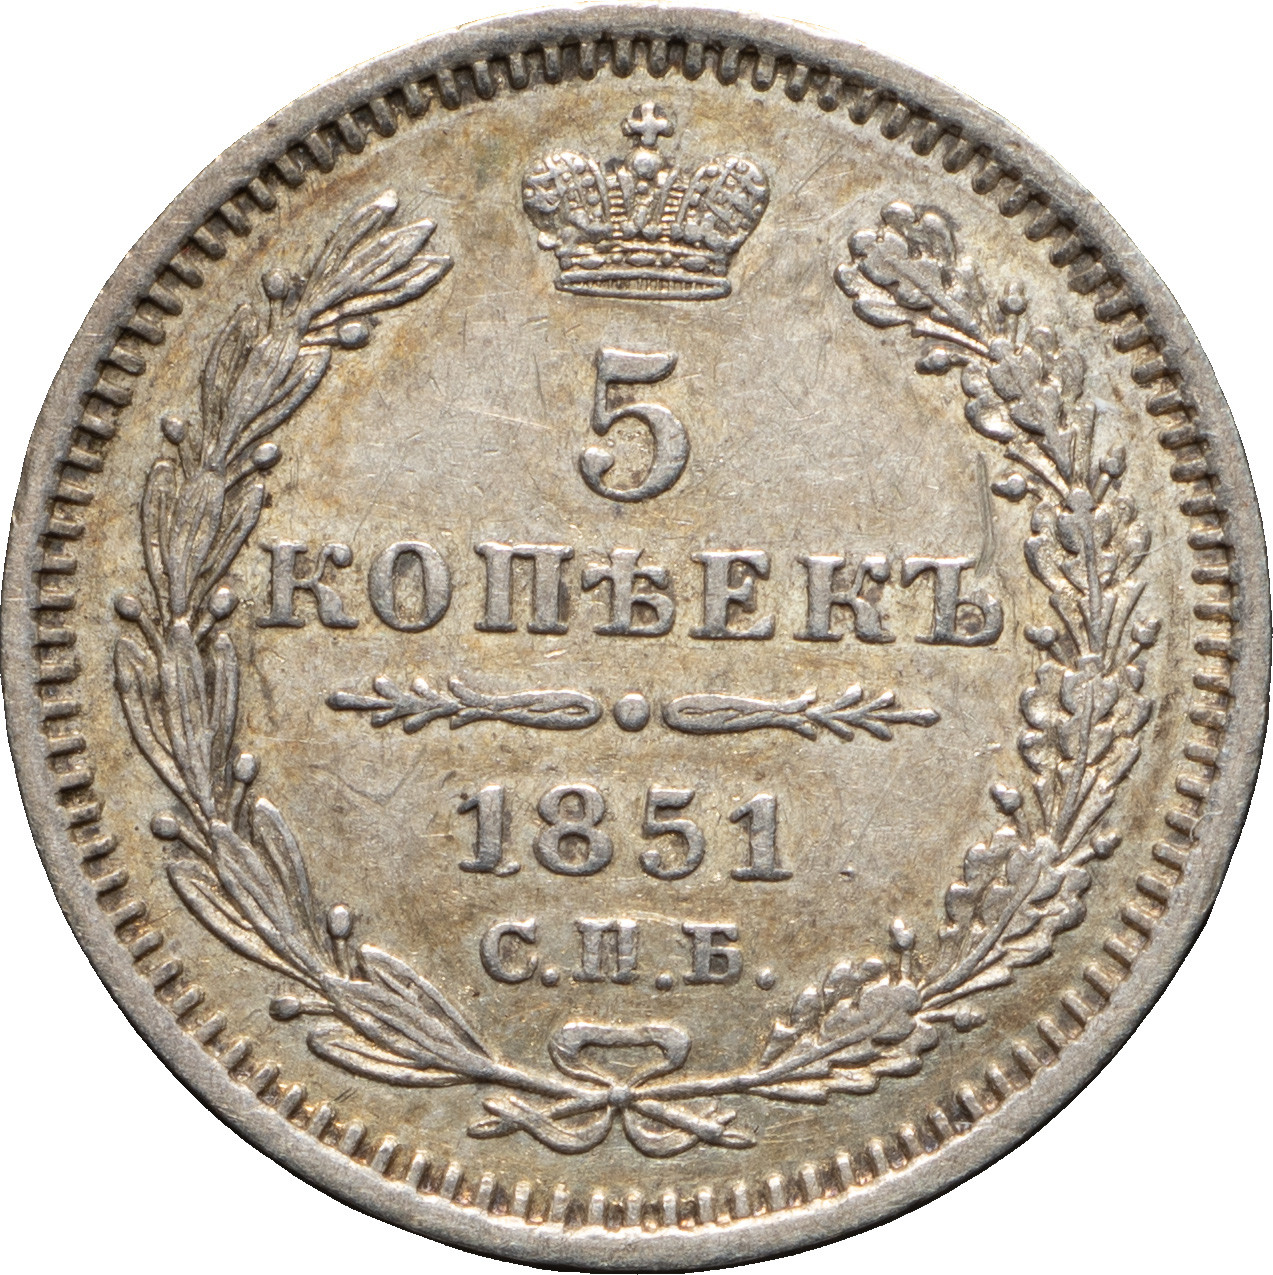 5 копеек 1851 года